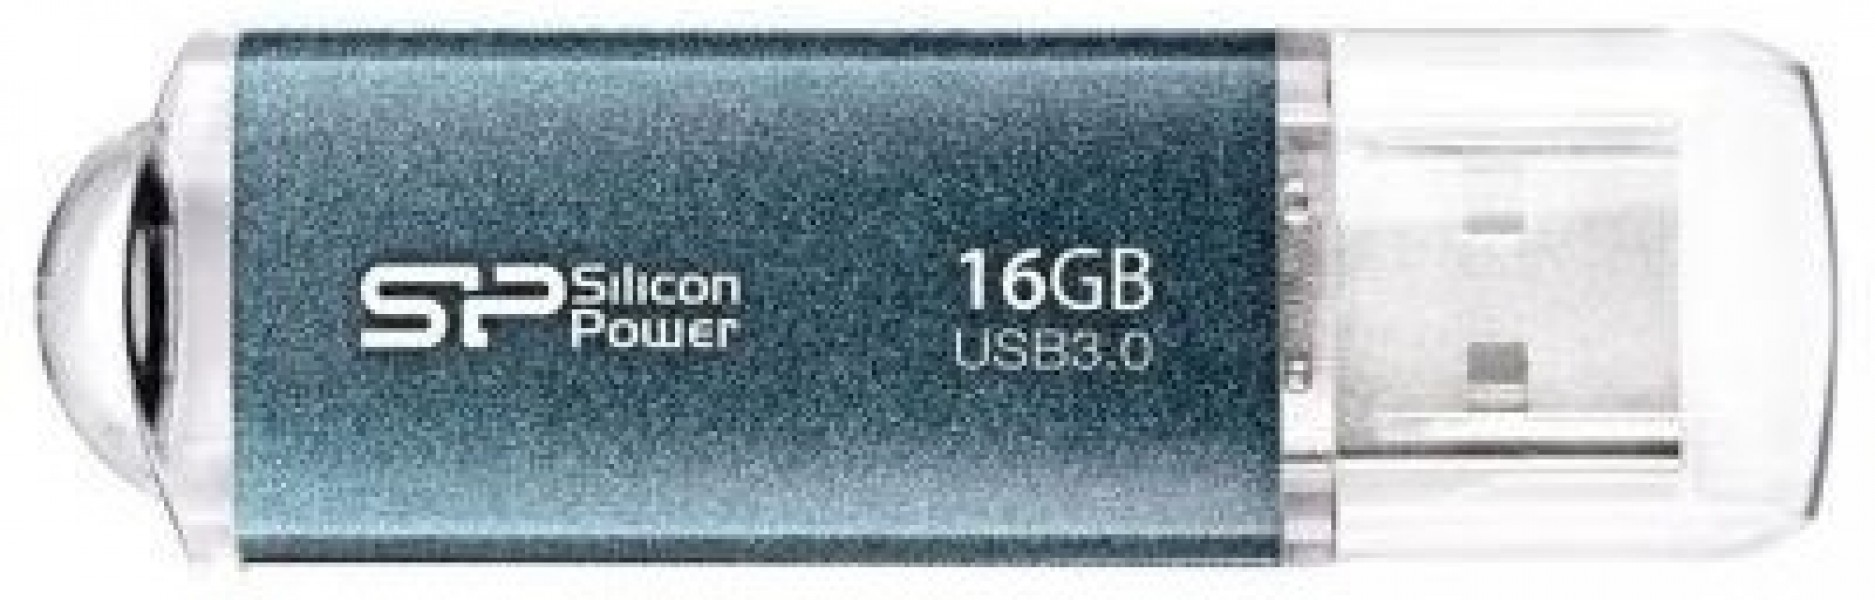 Silicon Power Marvel M01 16GB Icy Blue USB 3.0